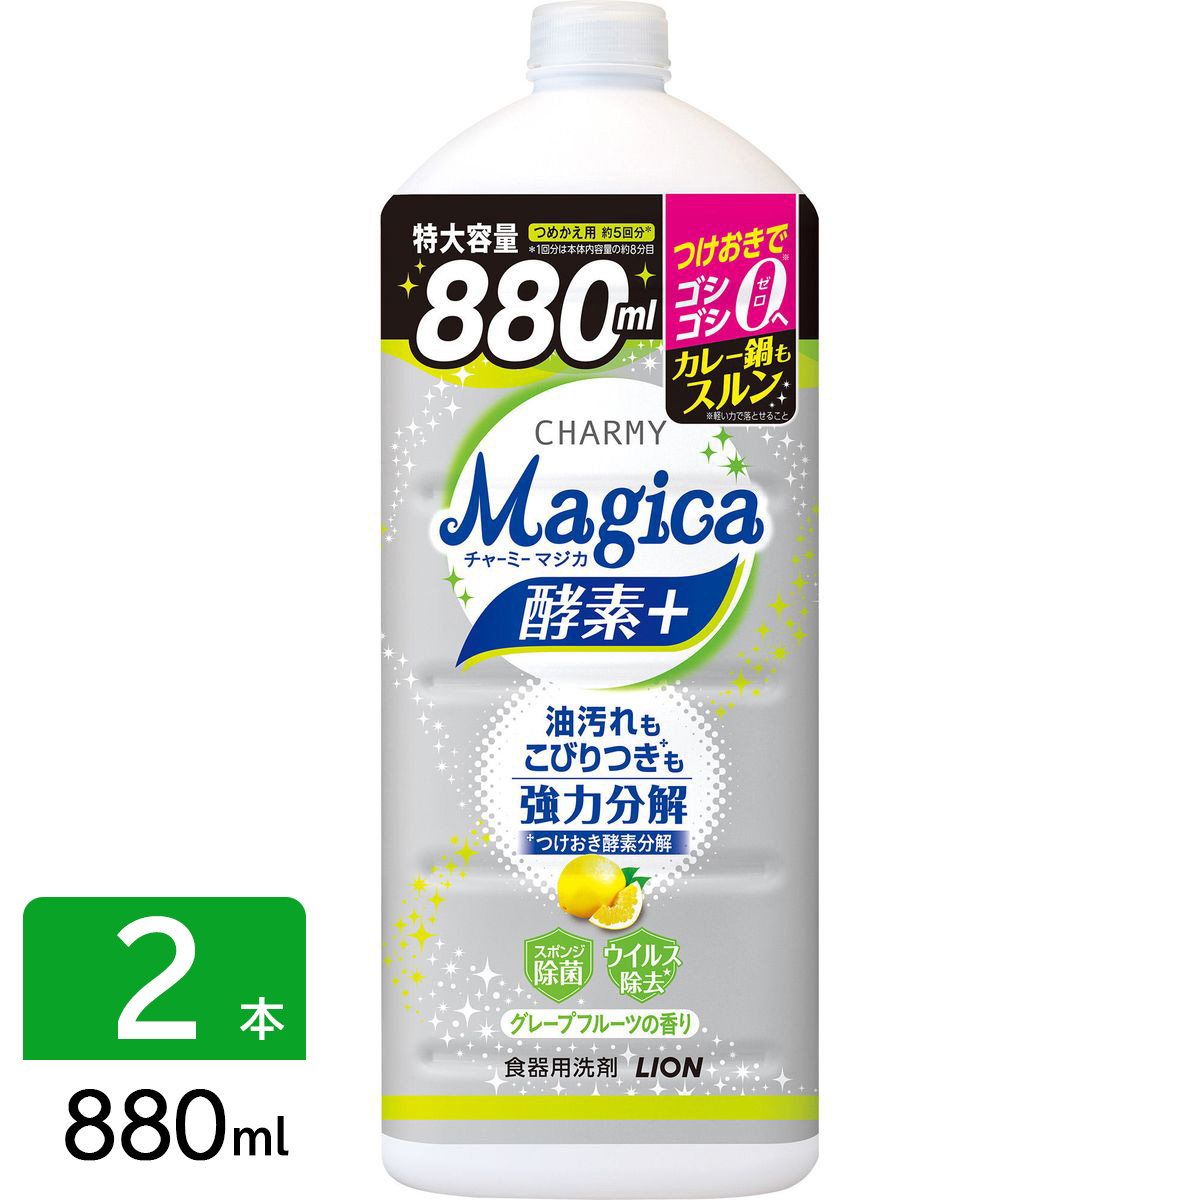 LION CHARMY Magica 酵素プラス グレープフルーツの香り 詰替用 880ml ×2 CHARMY Magica 台所用洗剤の商品画像